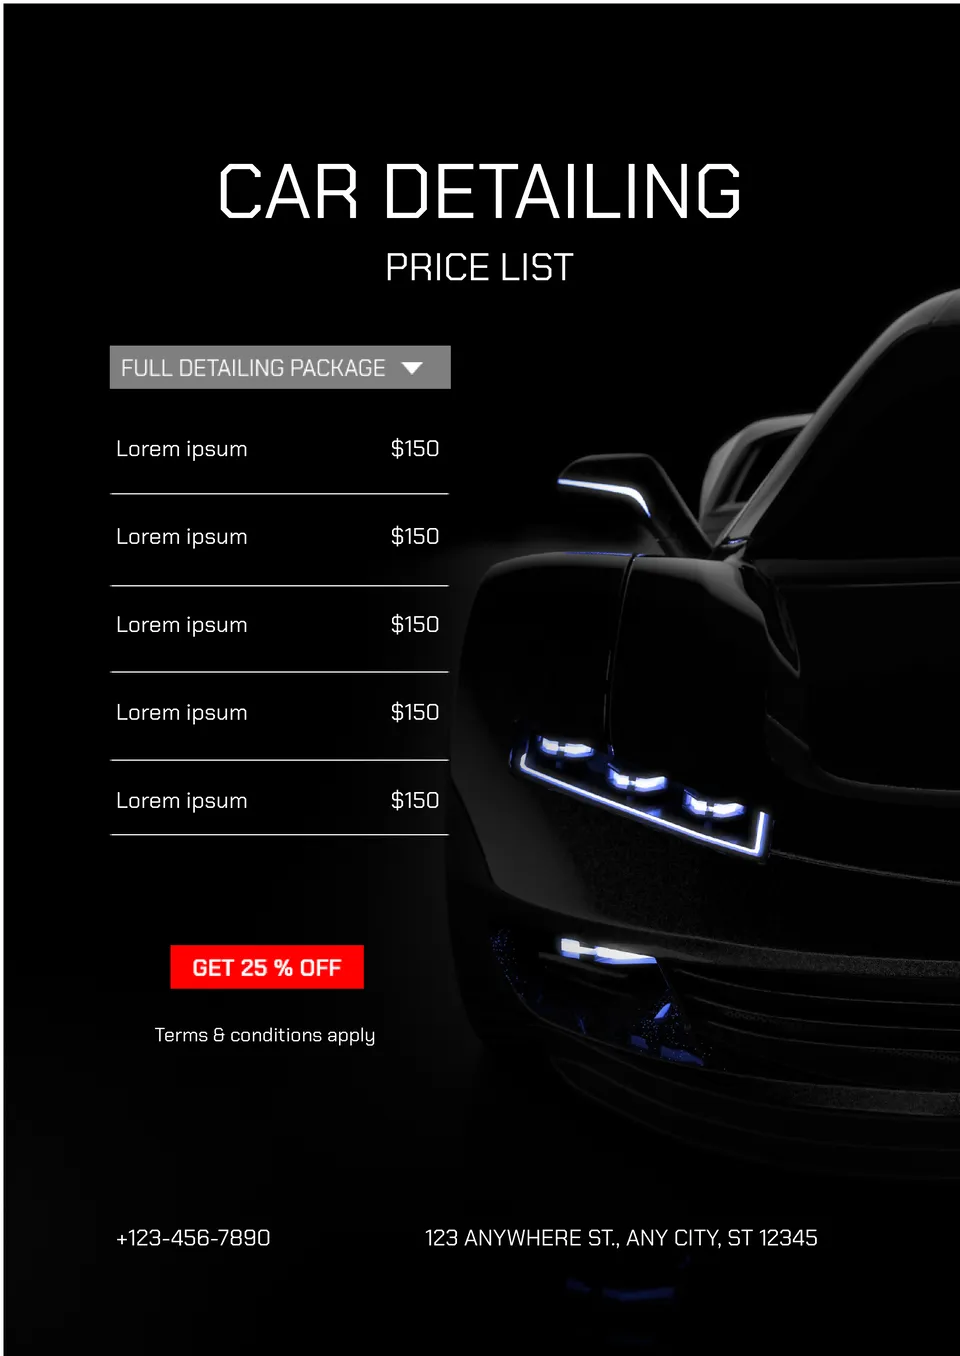 Car Detailing Price List Template